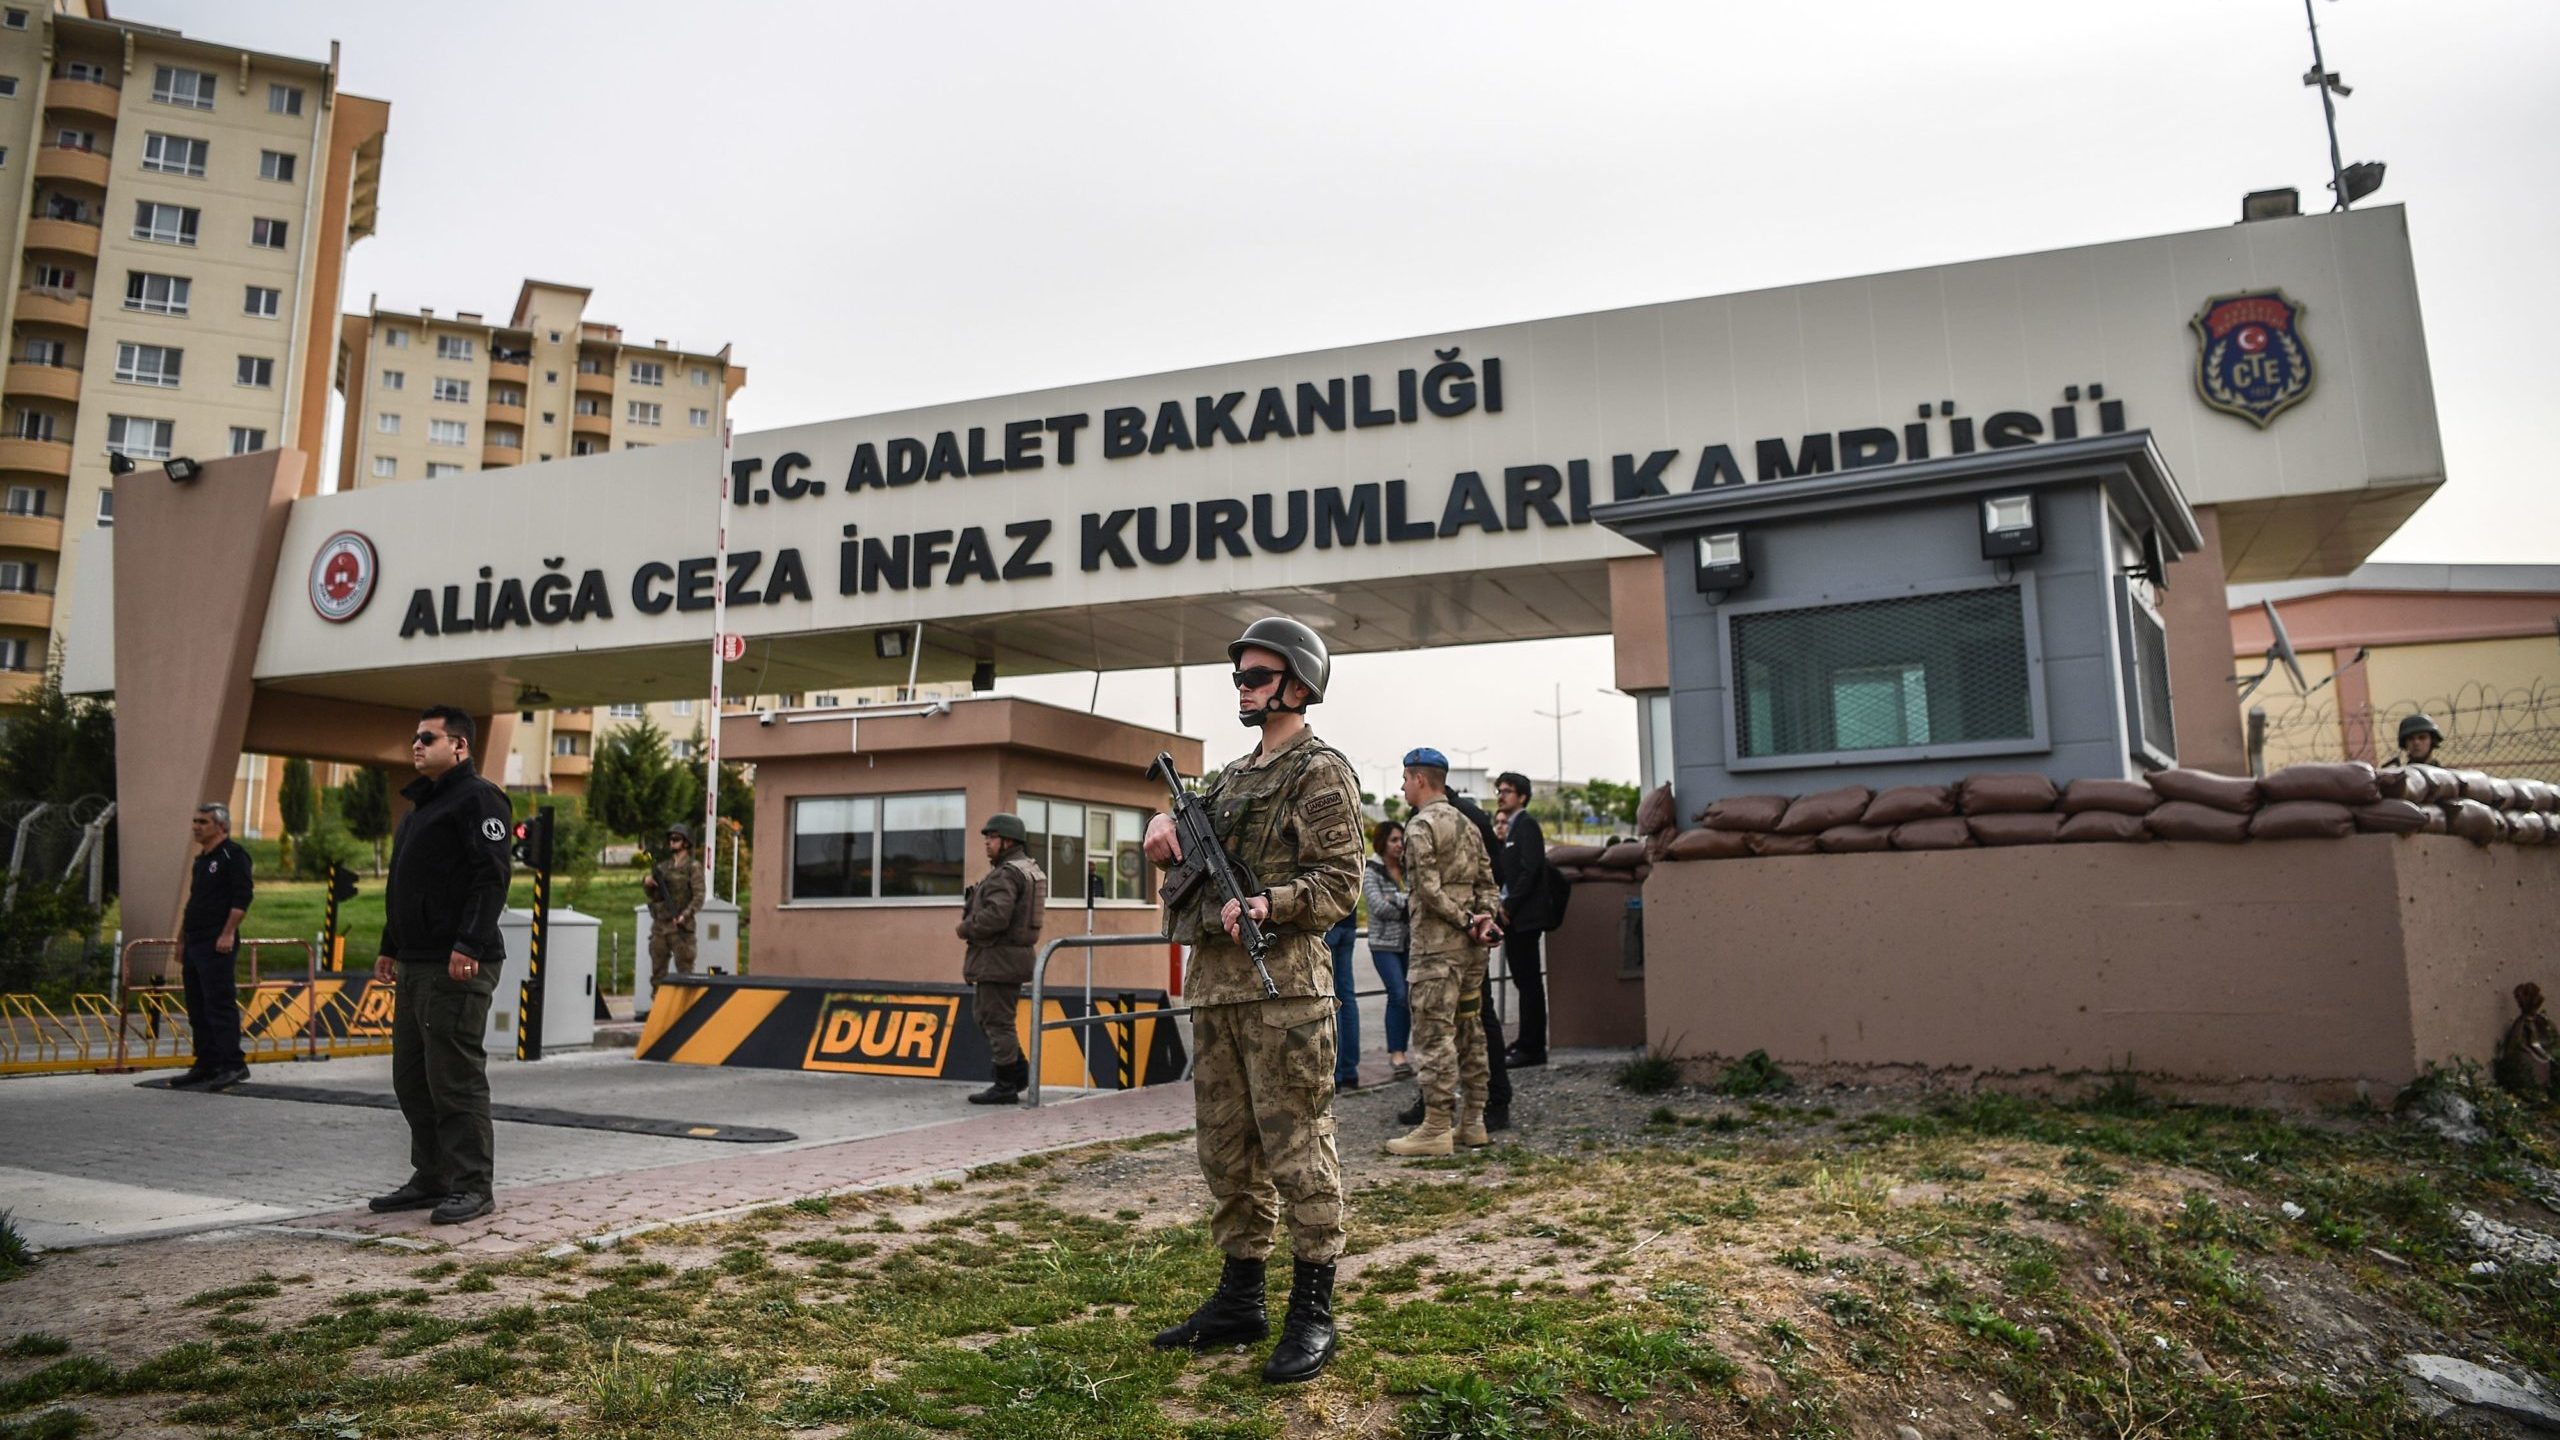 Turkey Mulls Prisoner Release to Reduce COVID-19 Risk